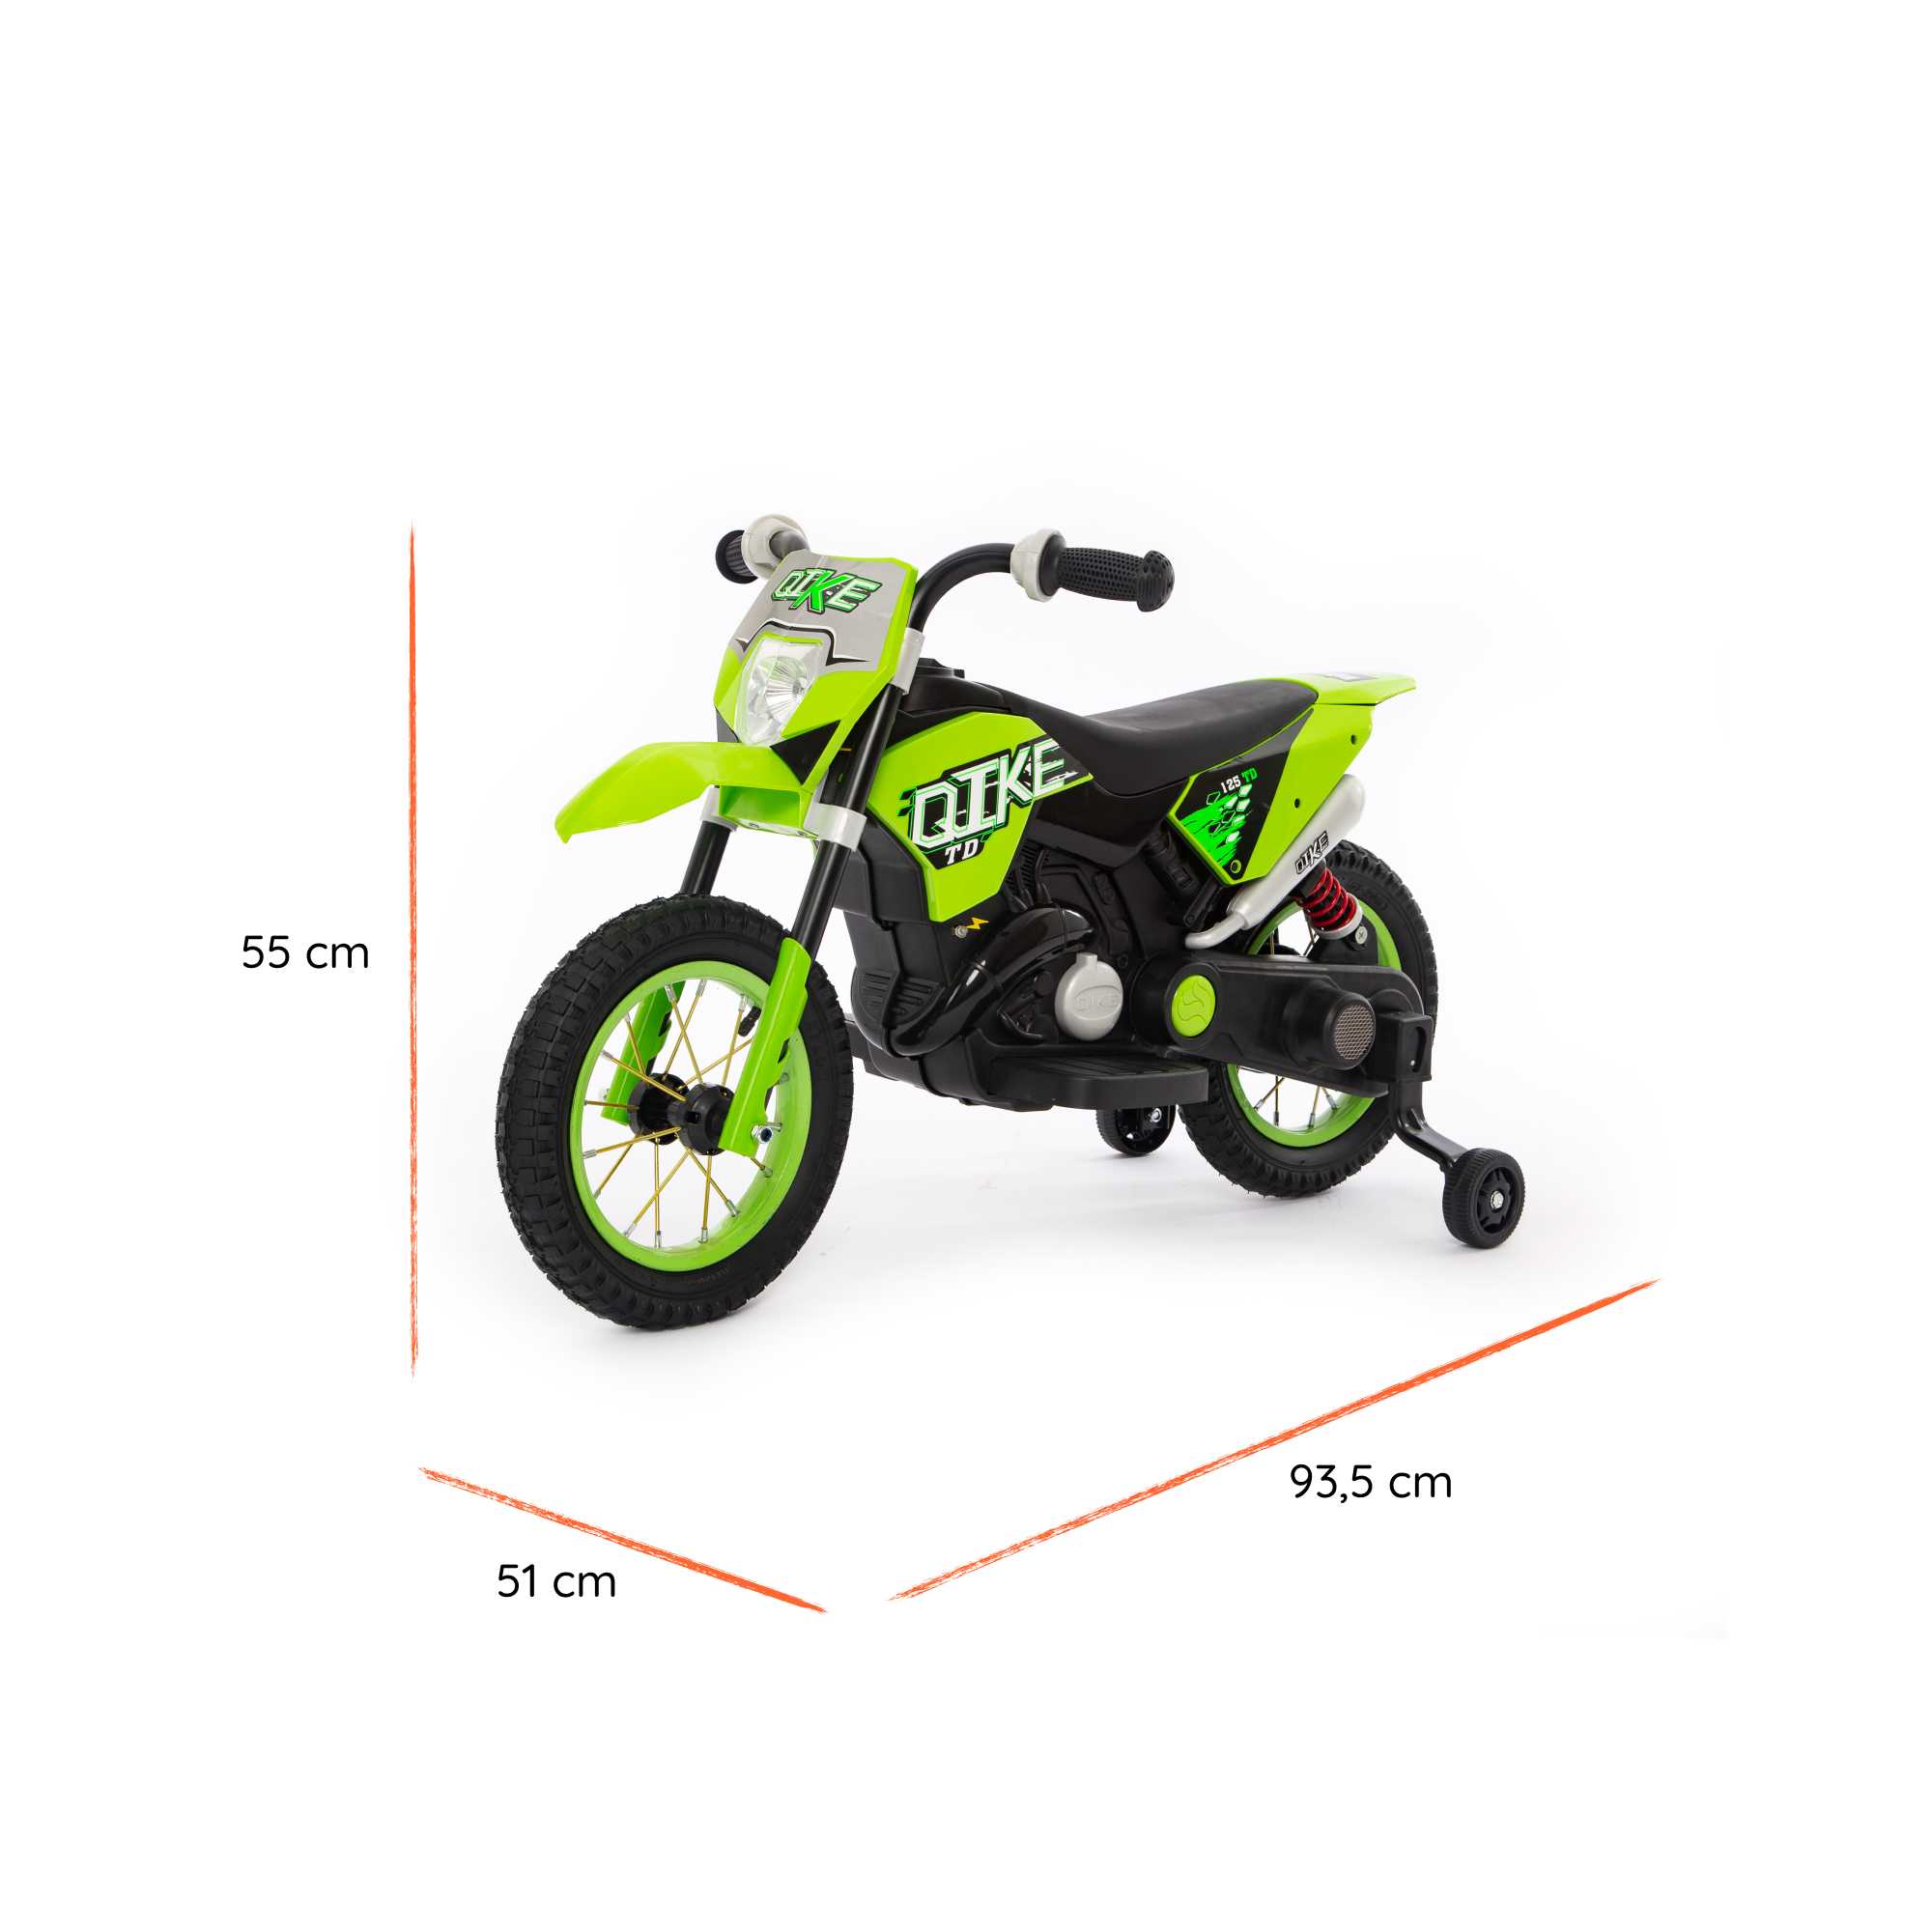 Moto cross vert dimensions